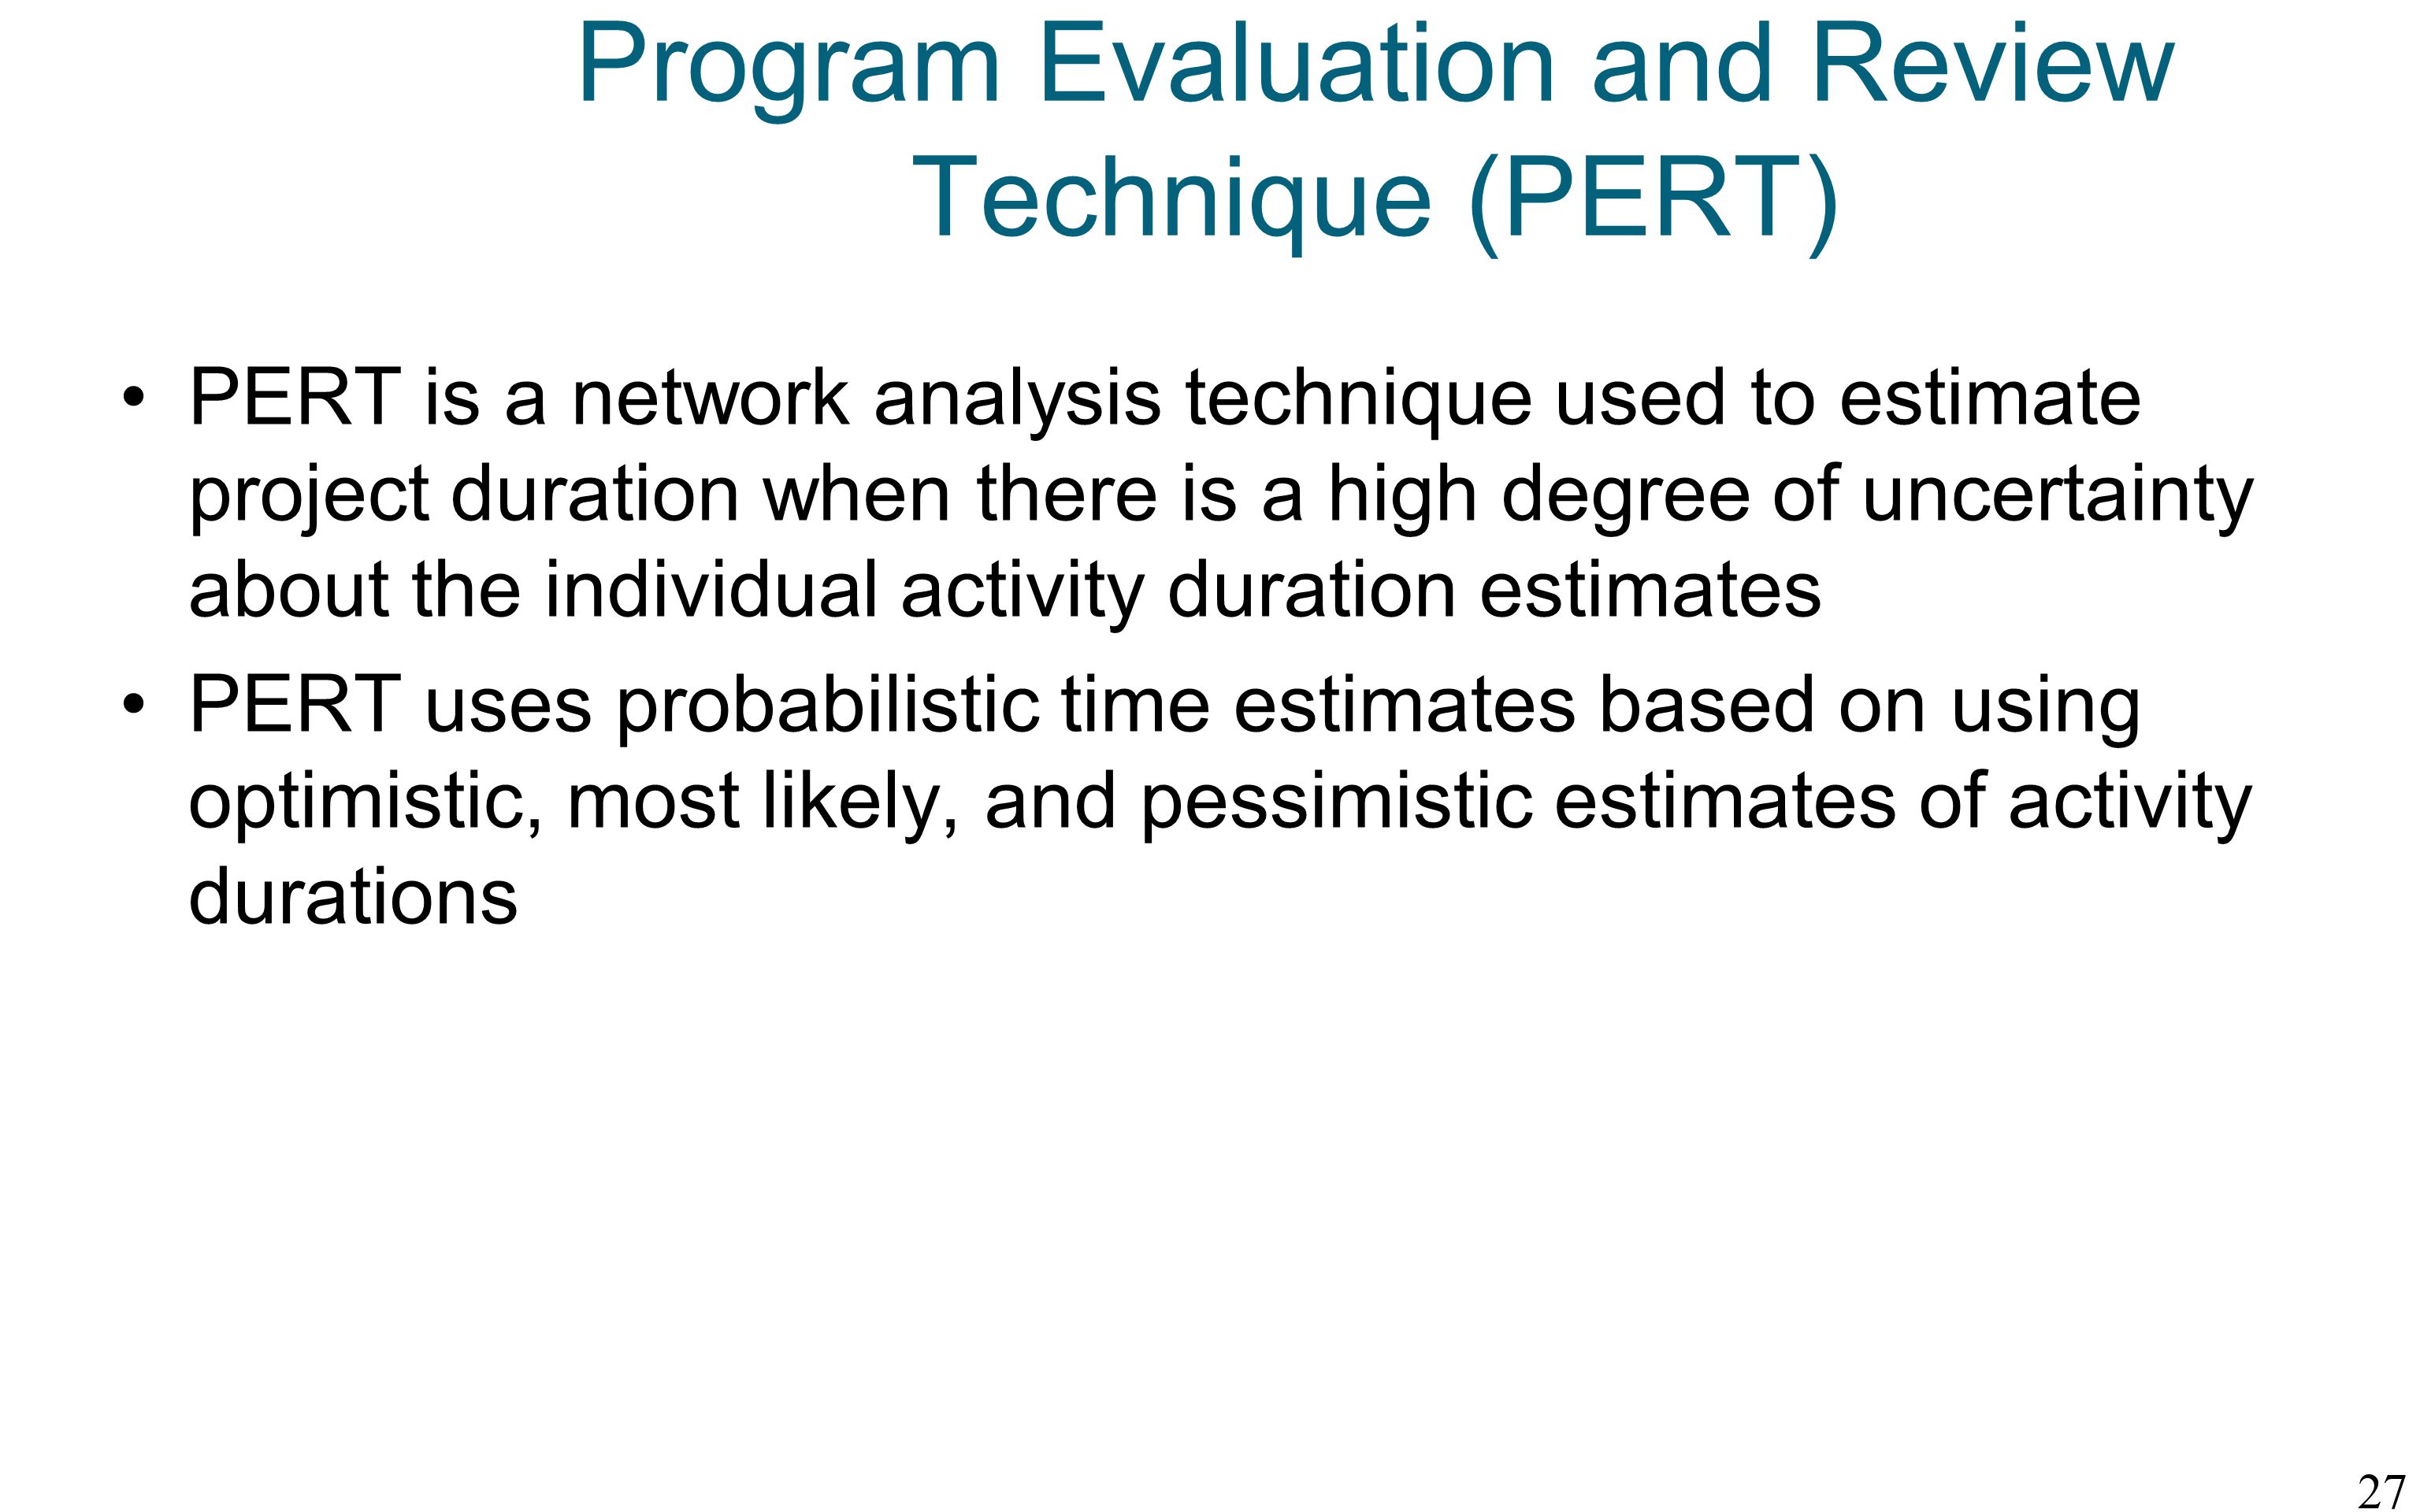 Program Evaluation and Review Technique (PERT)